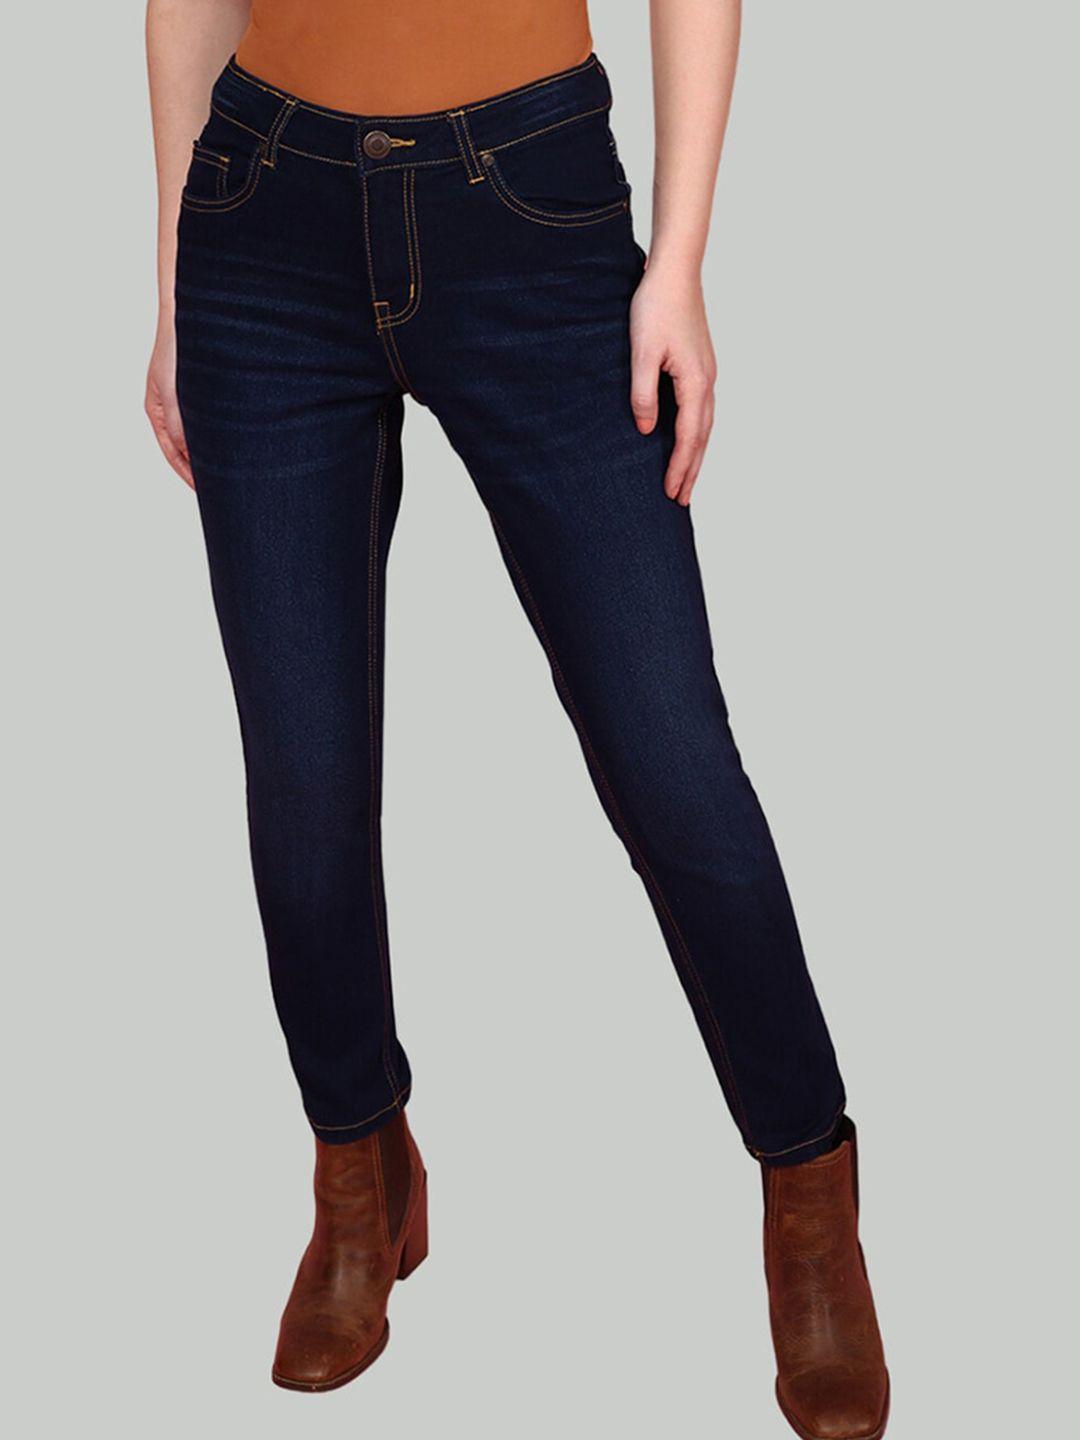 juneberry women original clean look slim fit light fade stretchable jeans